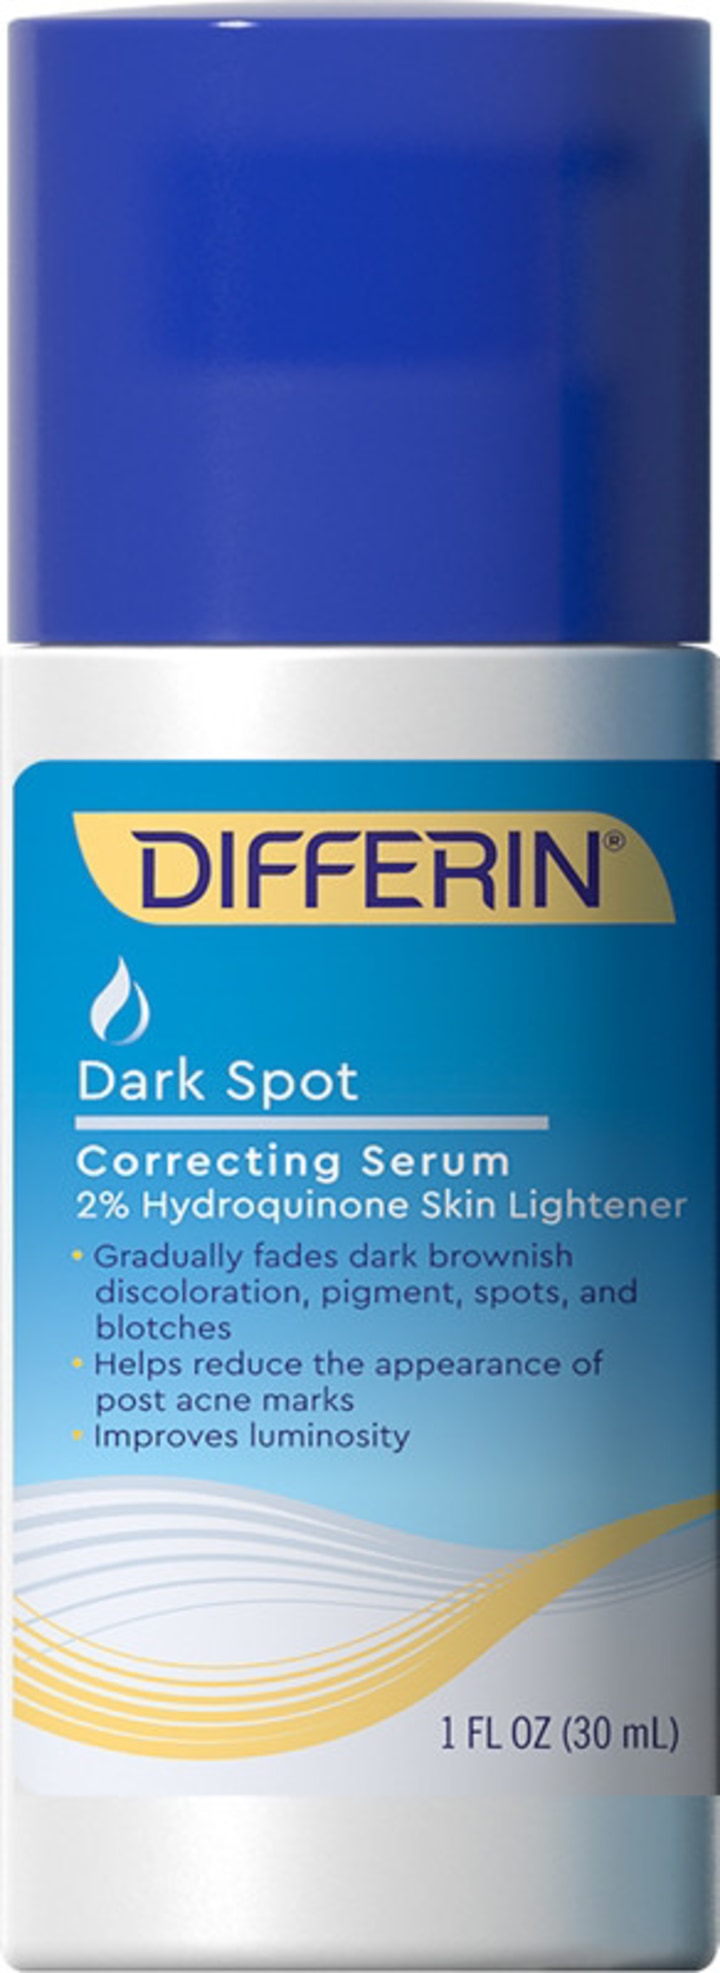 Dark Spot Correcting Serum